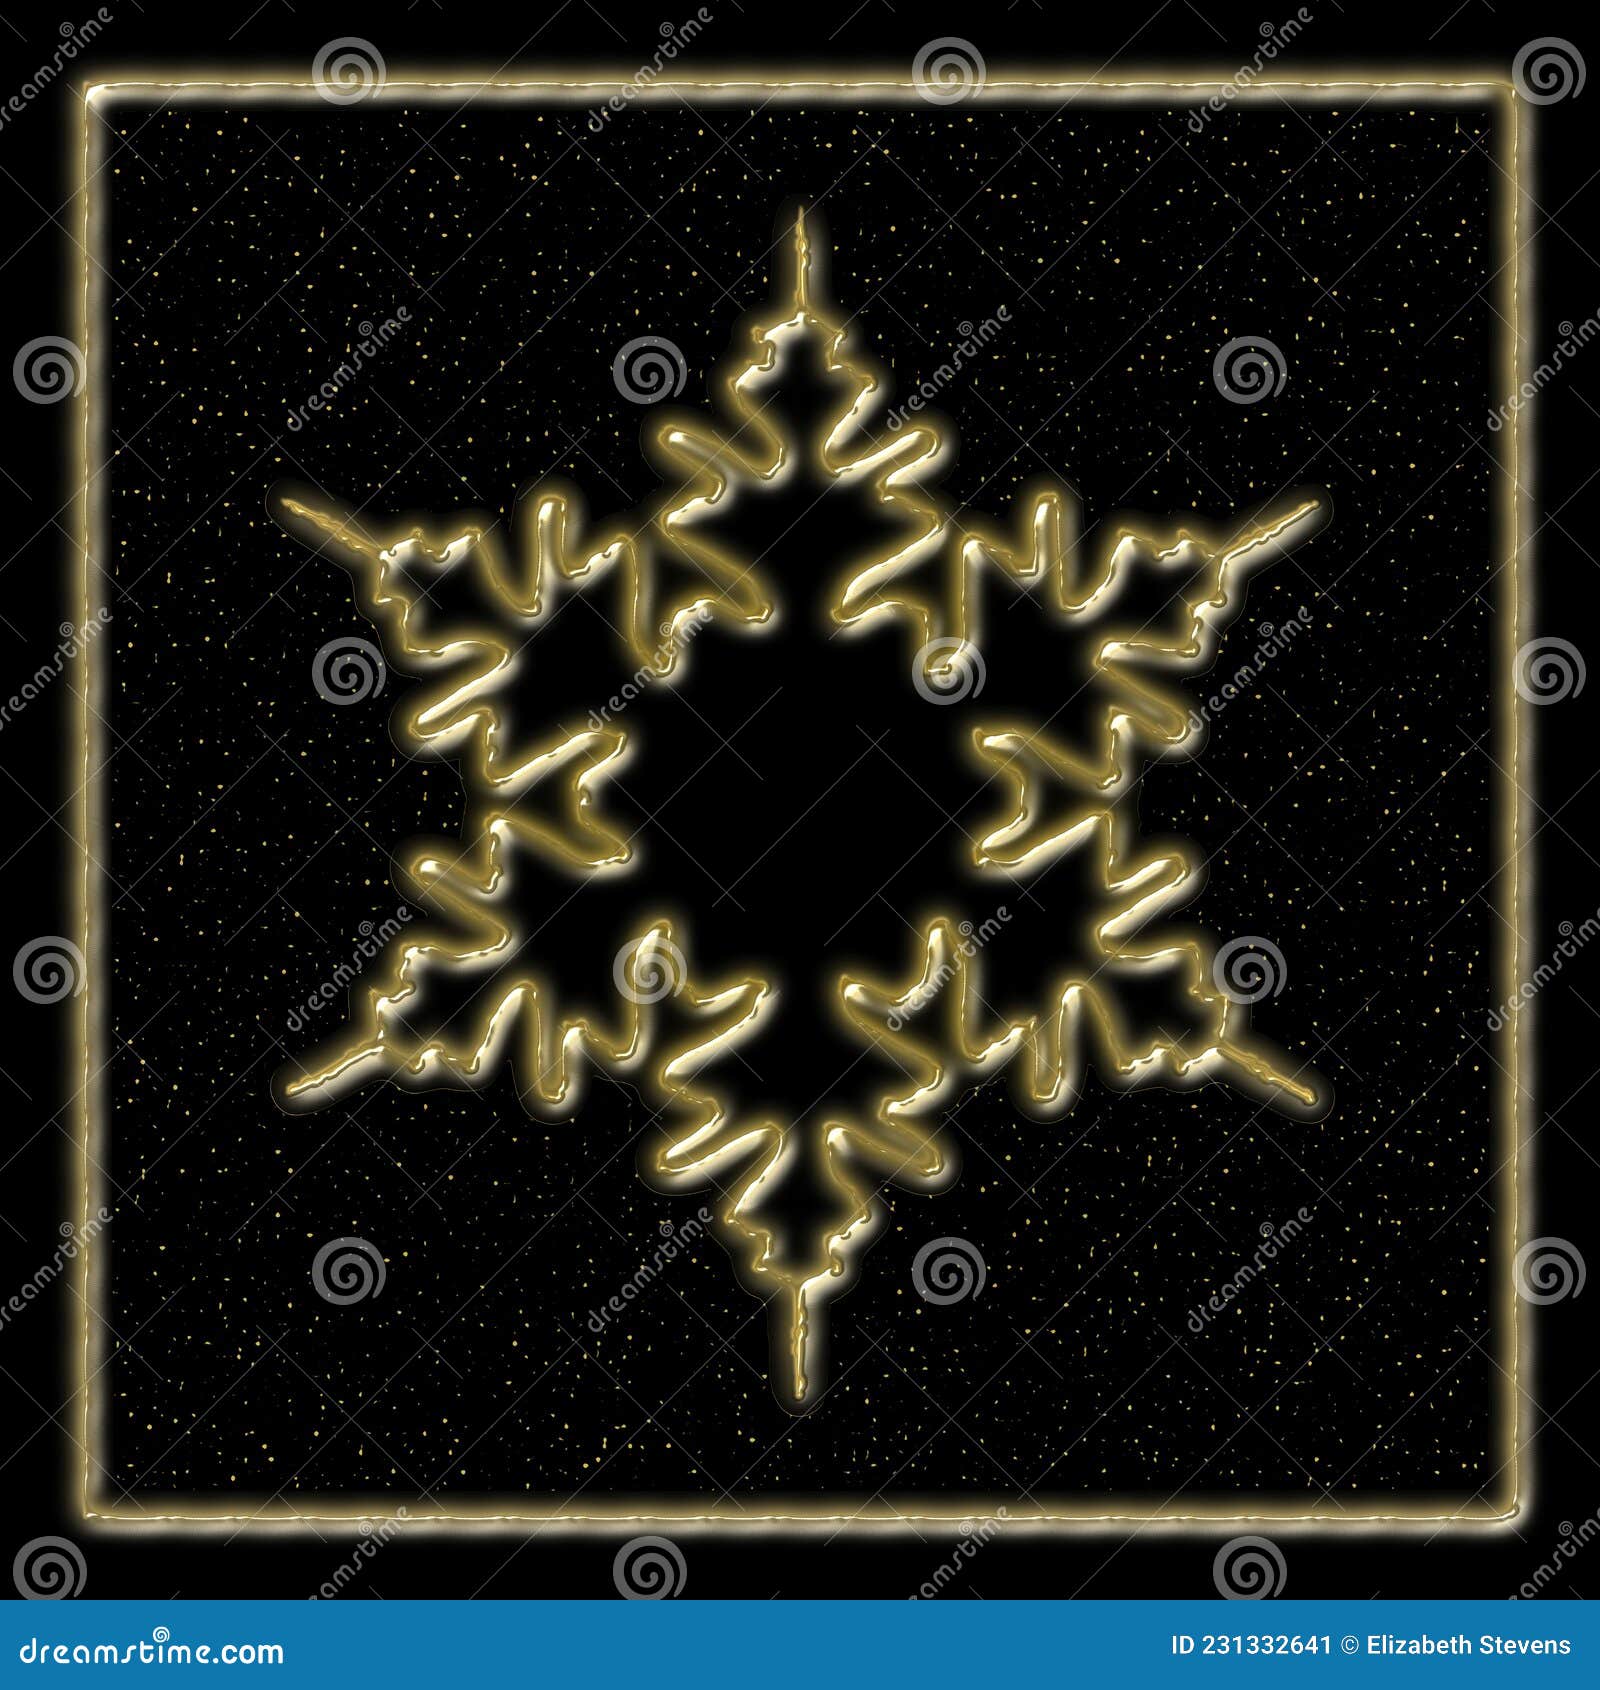 a-fat-golden-snowflake-stock-illustration-illustration-of-golden